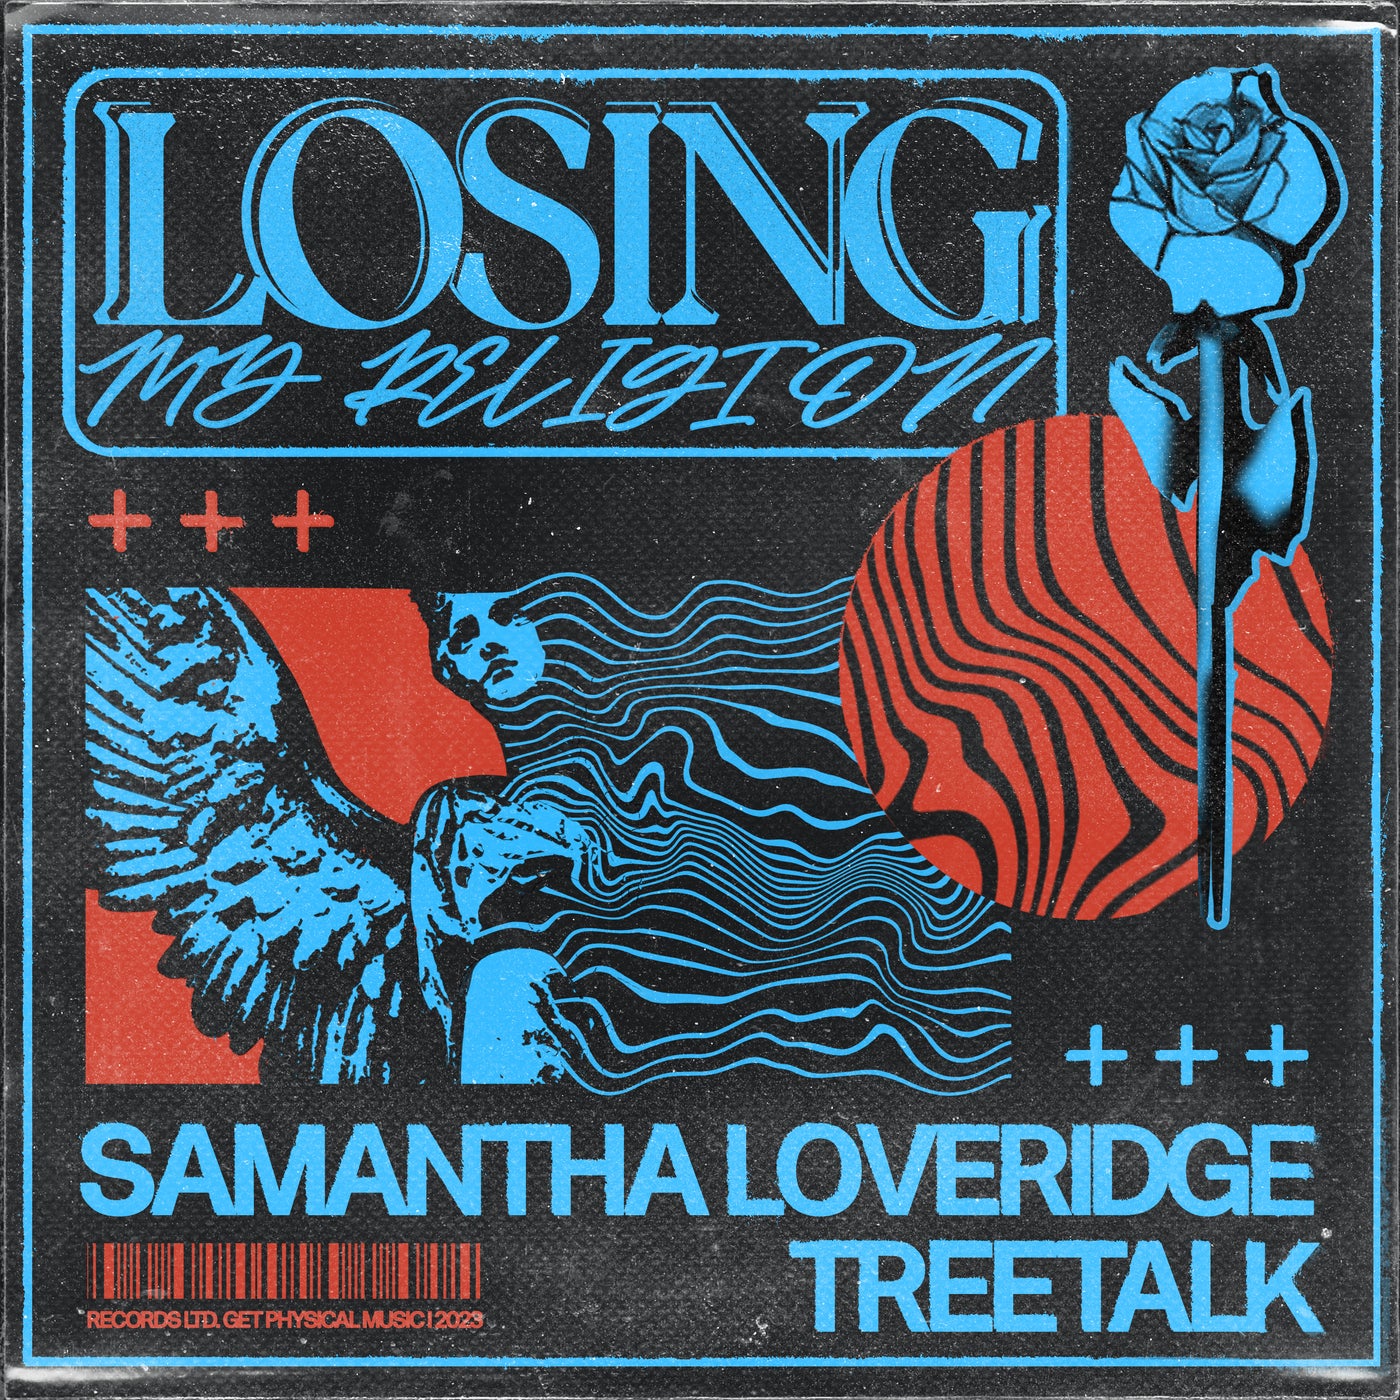 Samantha Loveridge, Treetalk - Losing My Religion (extended Mix) on Revolution Radio